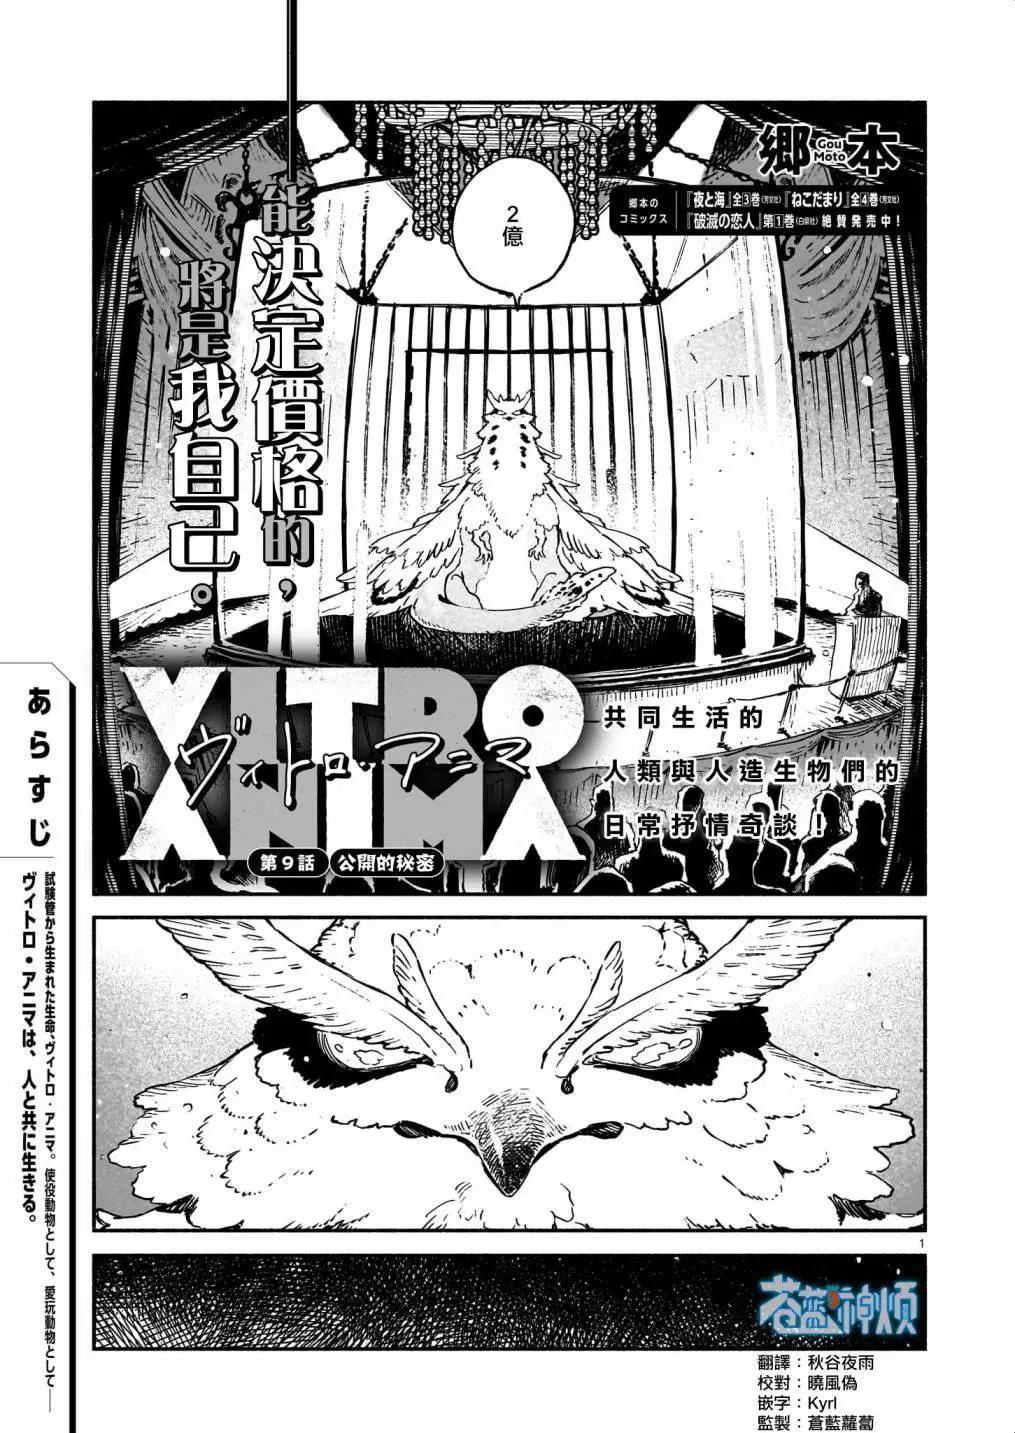 Vitro Anima - 第09話 - 1